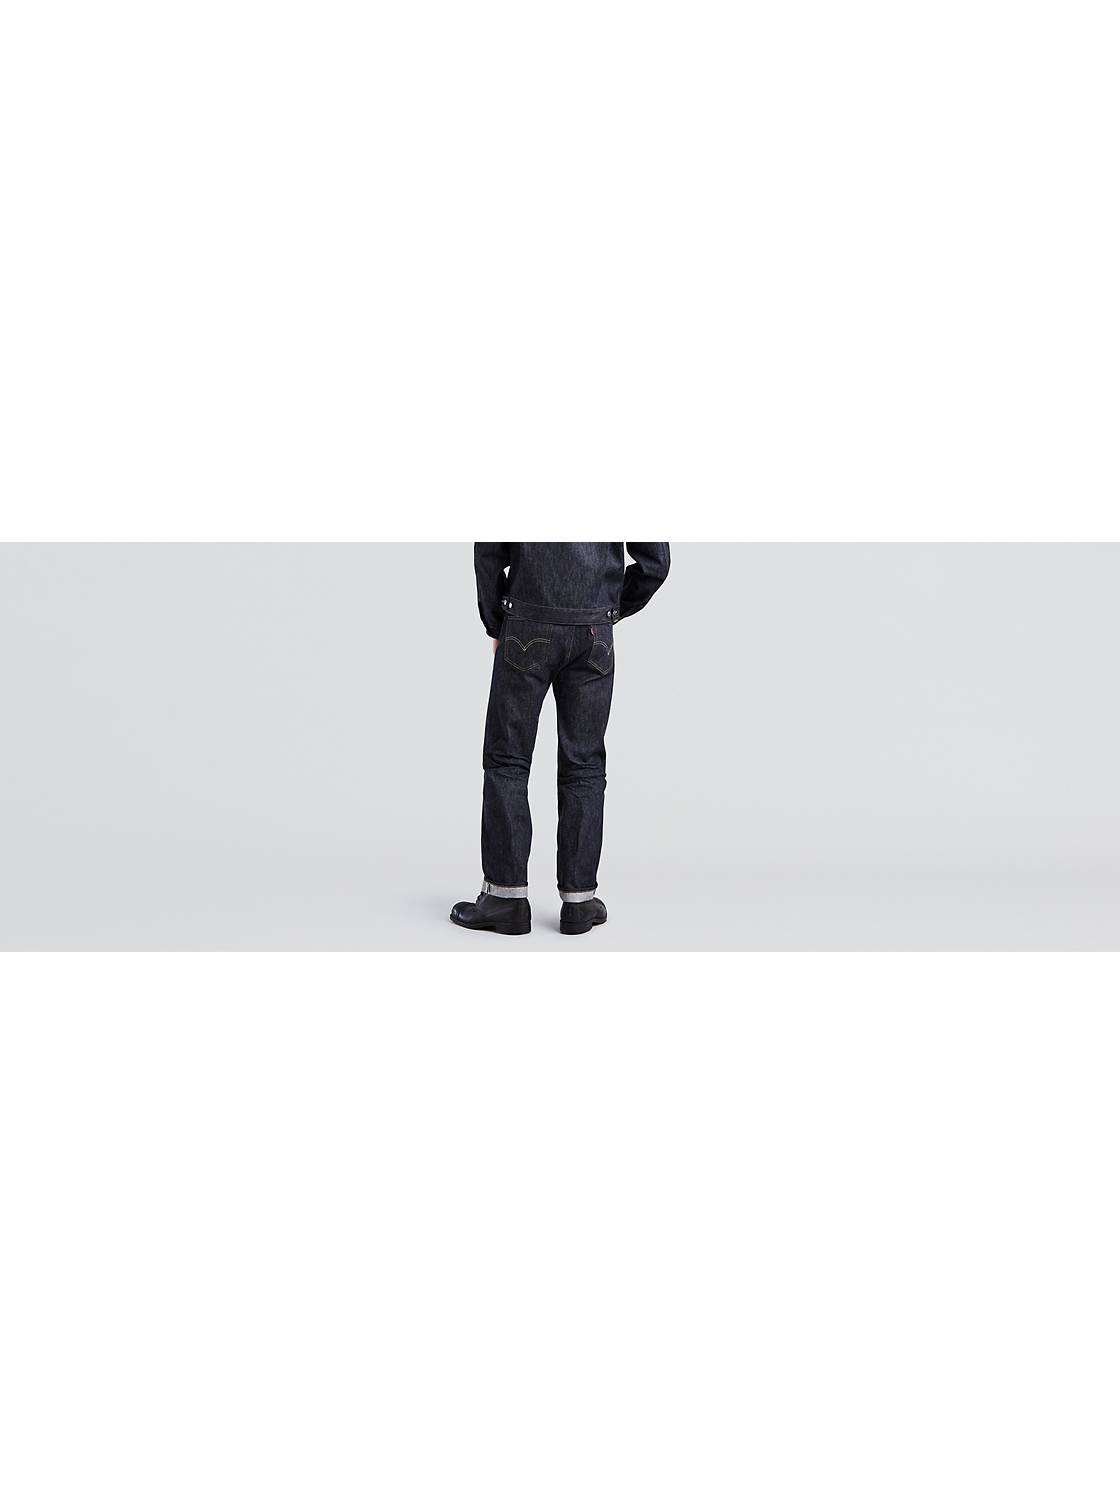 pantalon original levis levi's 501 color negro - Buy Men's vintage clothing  on todocoleccion